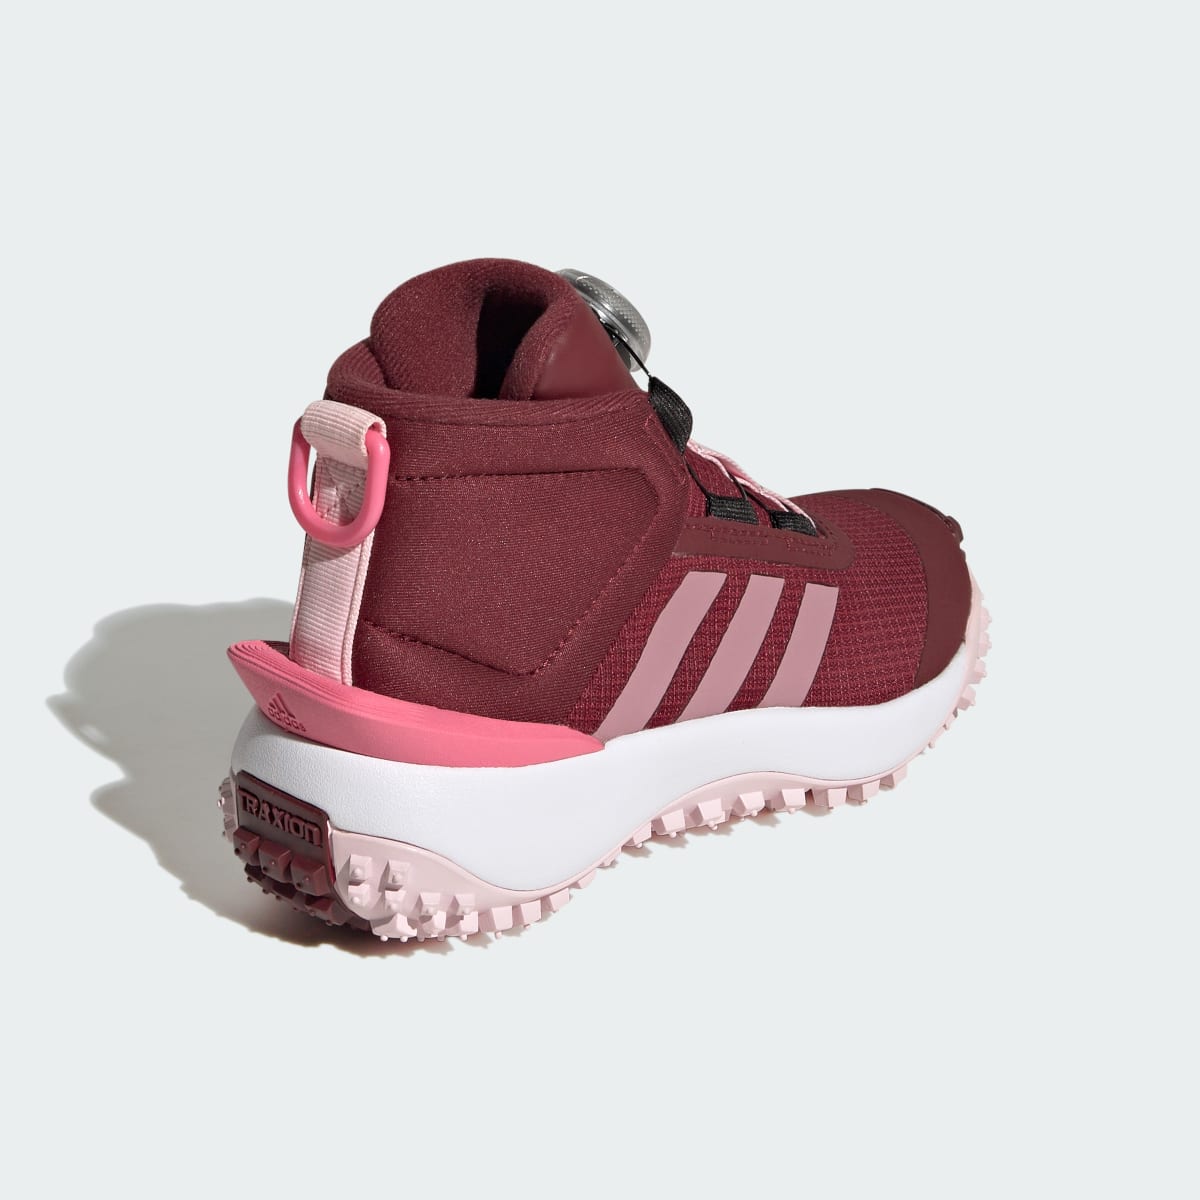 Adidas Chaussure Fortatrail Enfants. 6